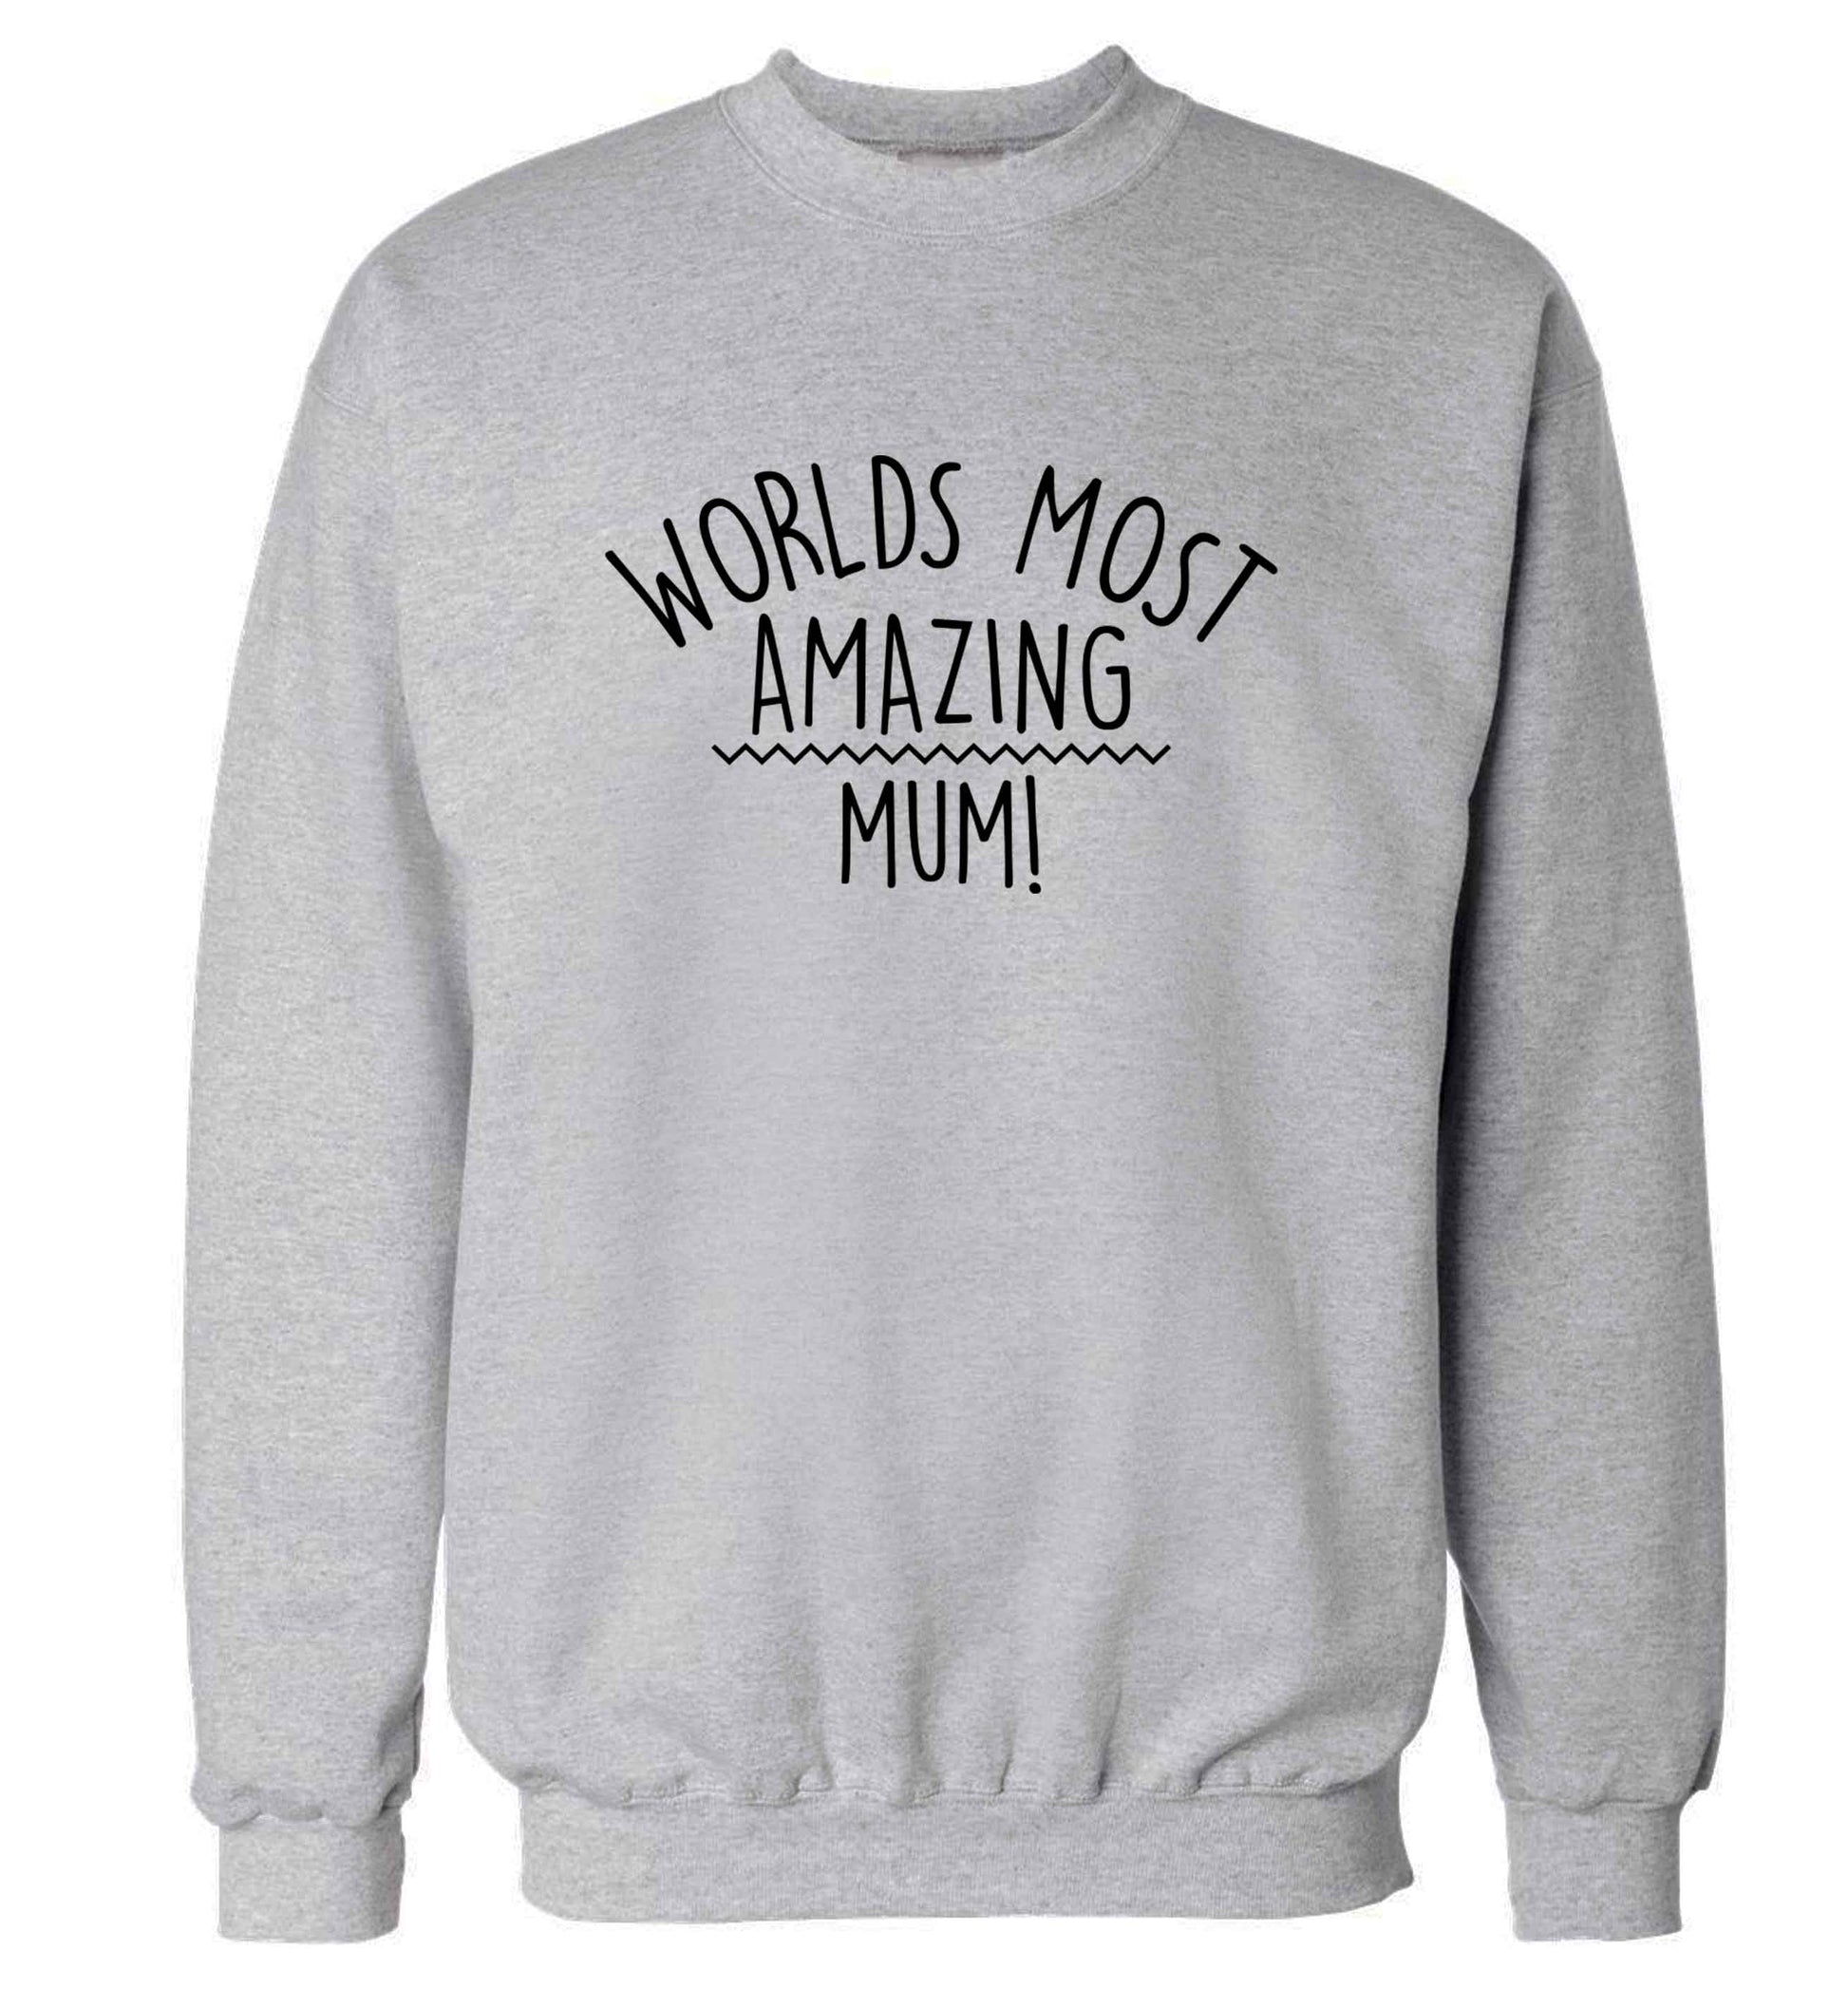 Worlds most amazing mum adult's unisex grey sweater 2XL